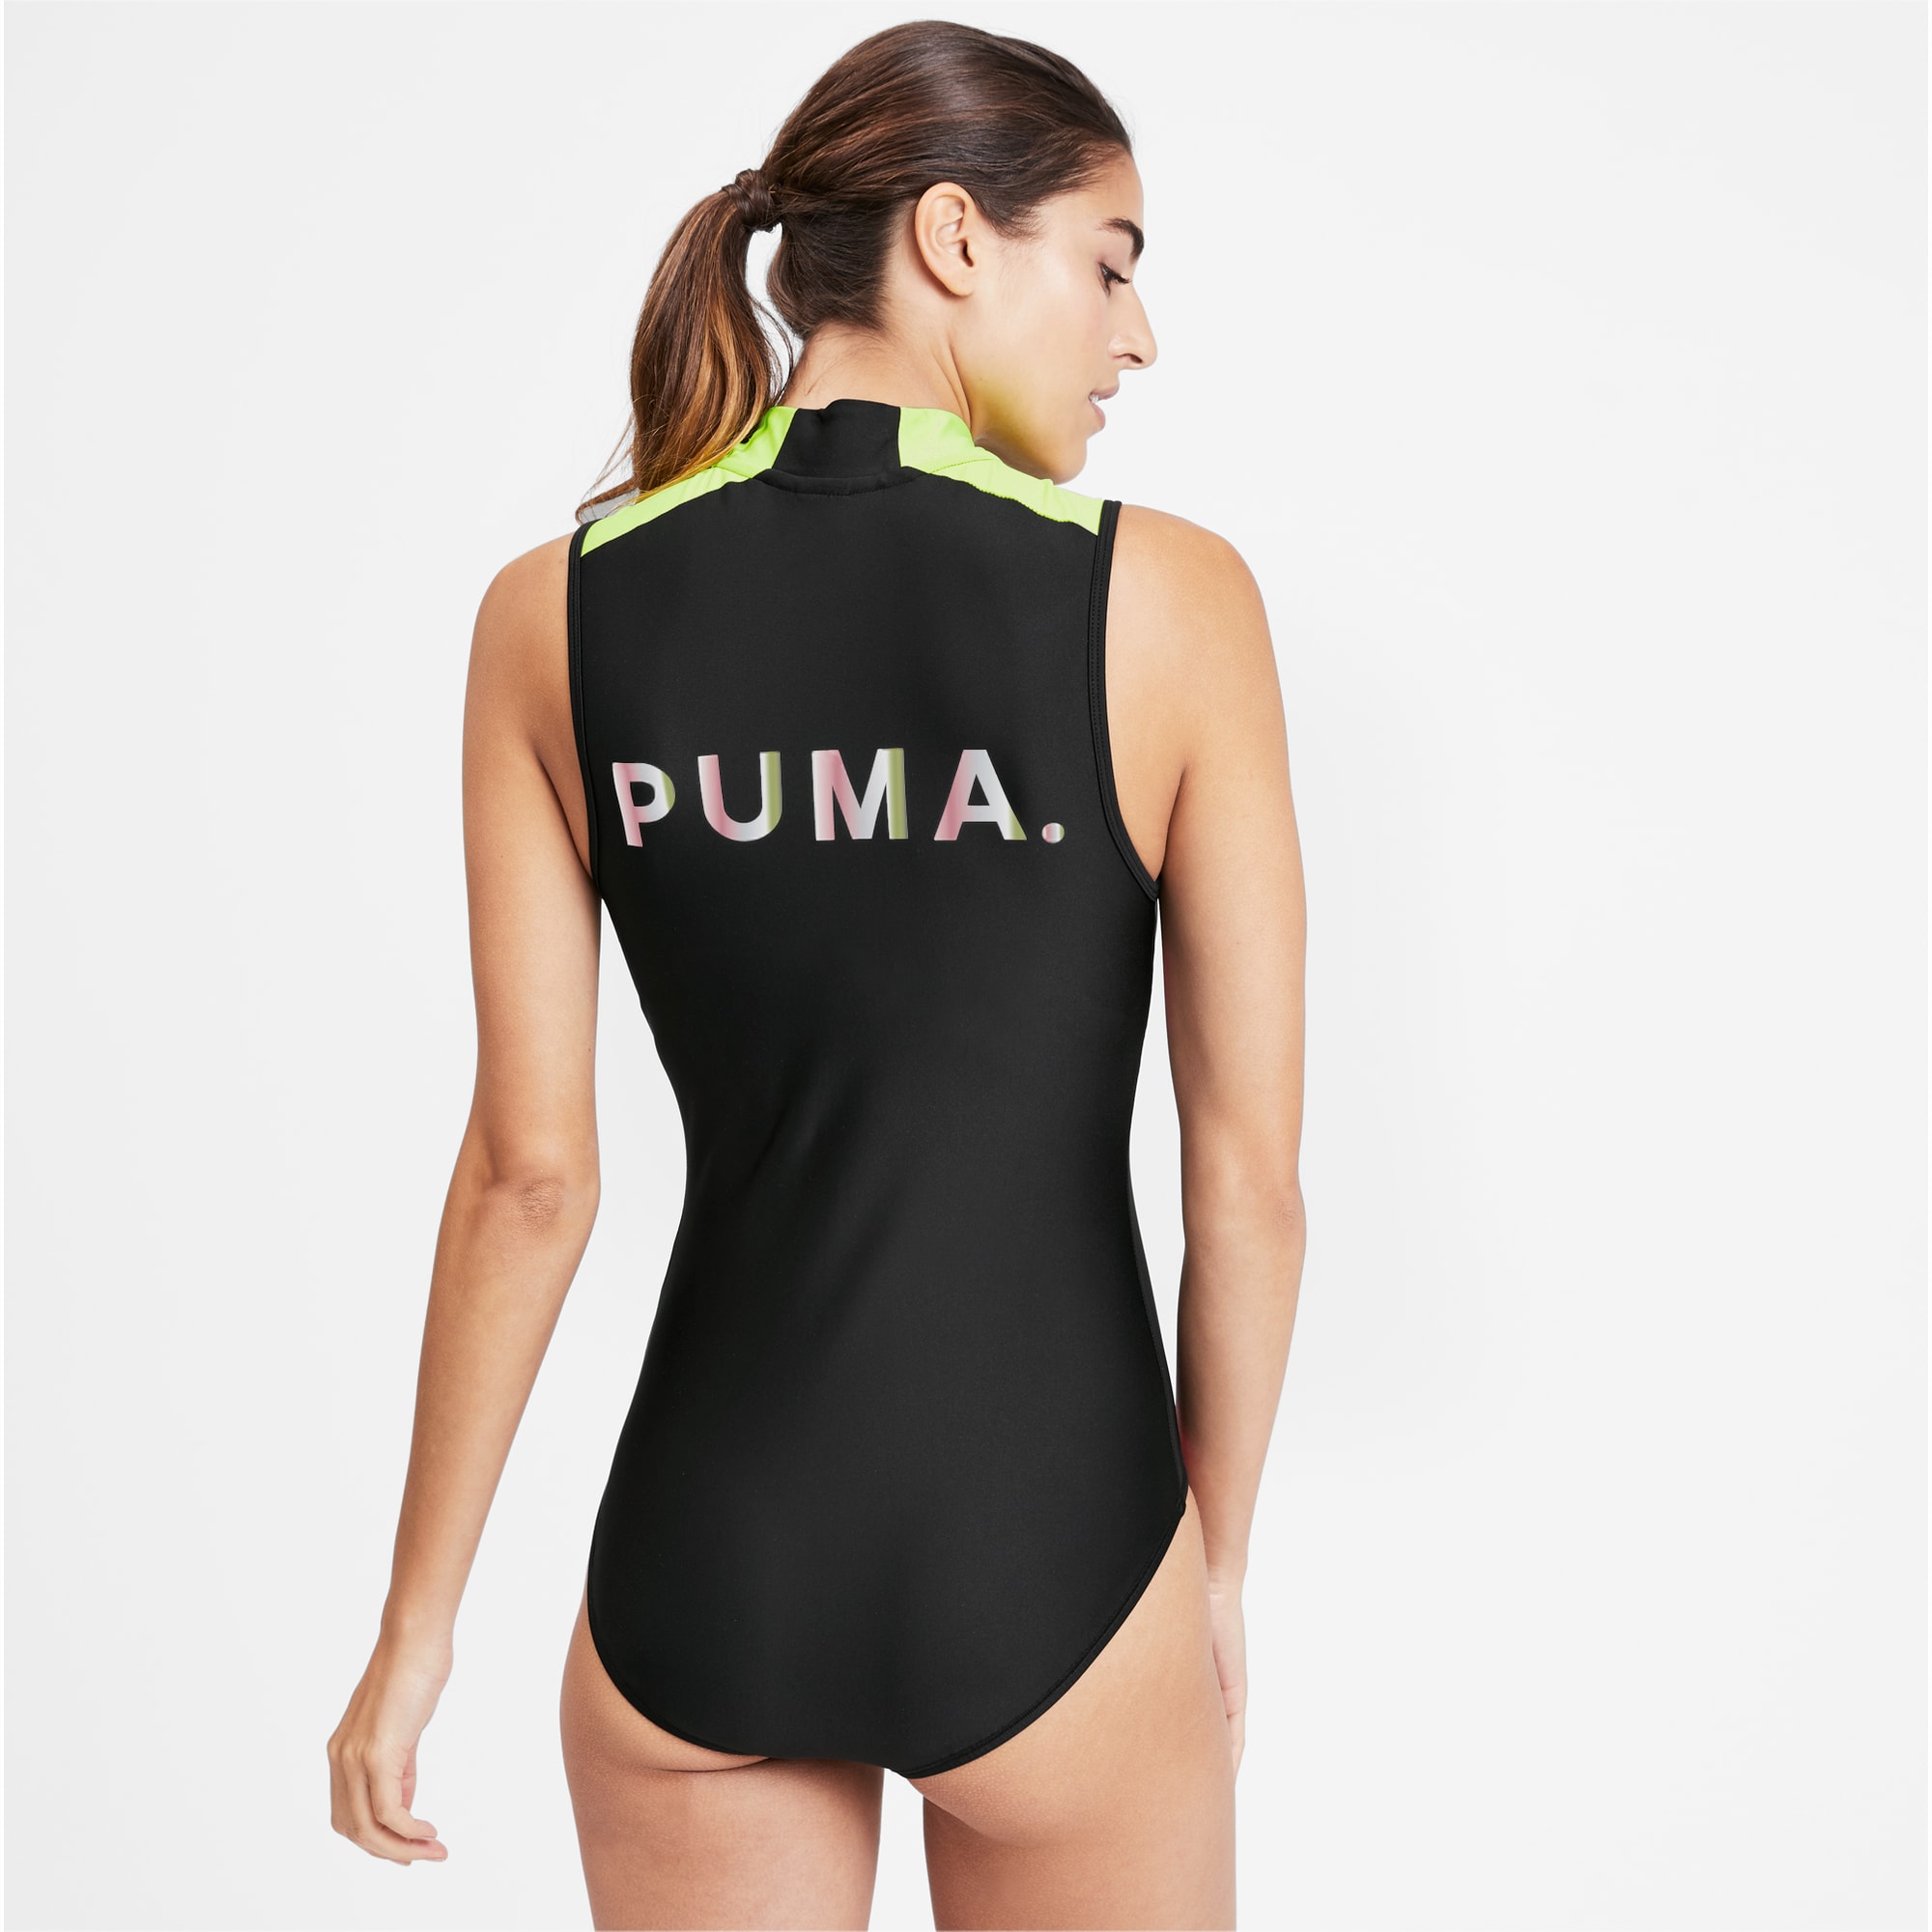 puma chase bodysuit